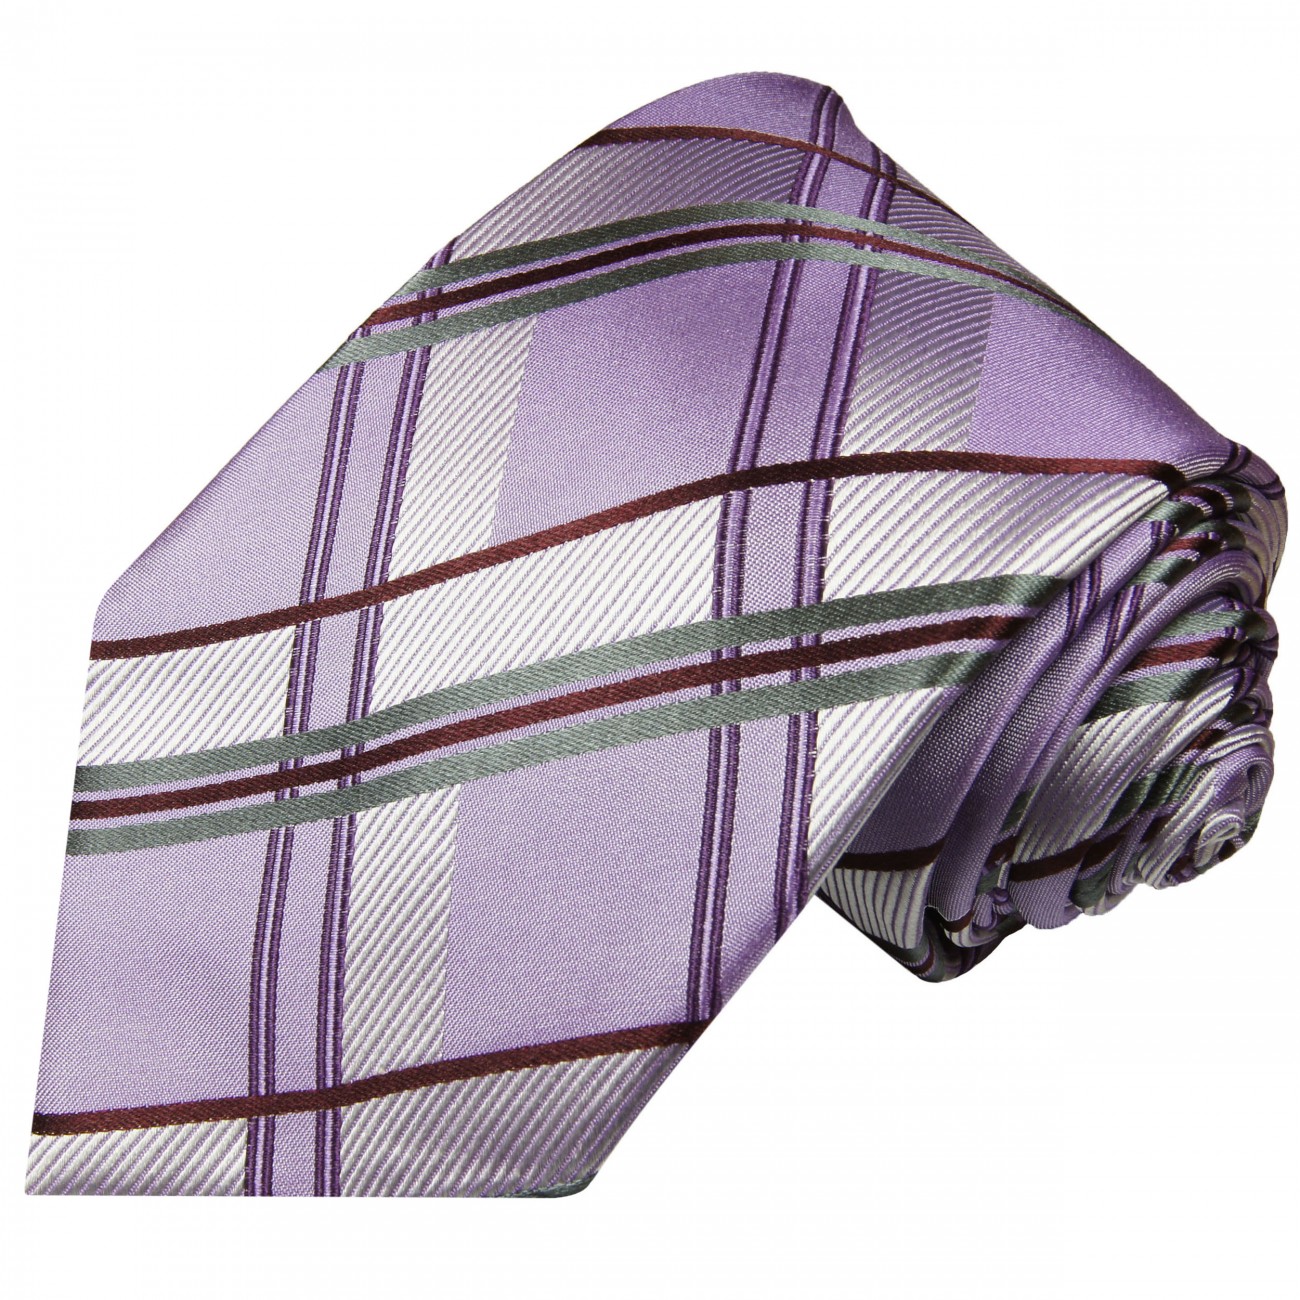 Krawatte lila violett Schottenmuster